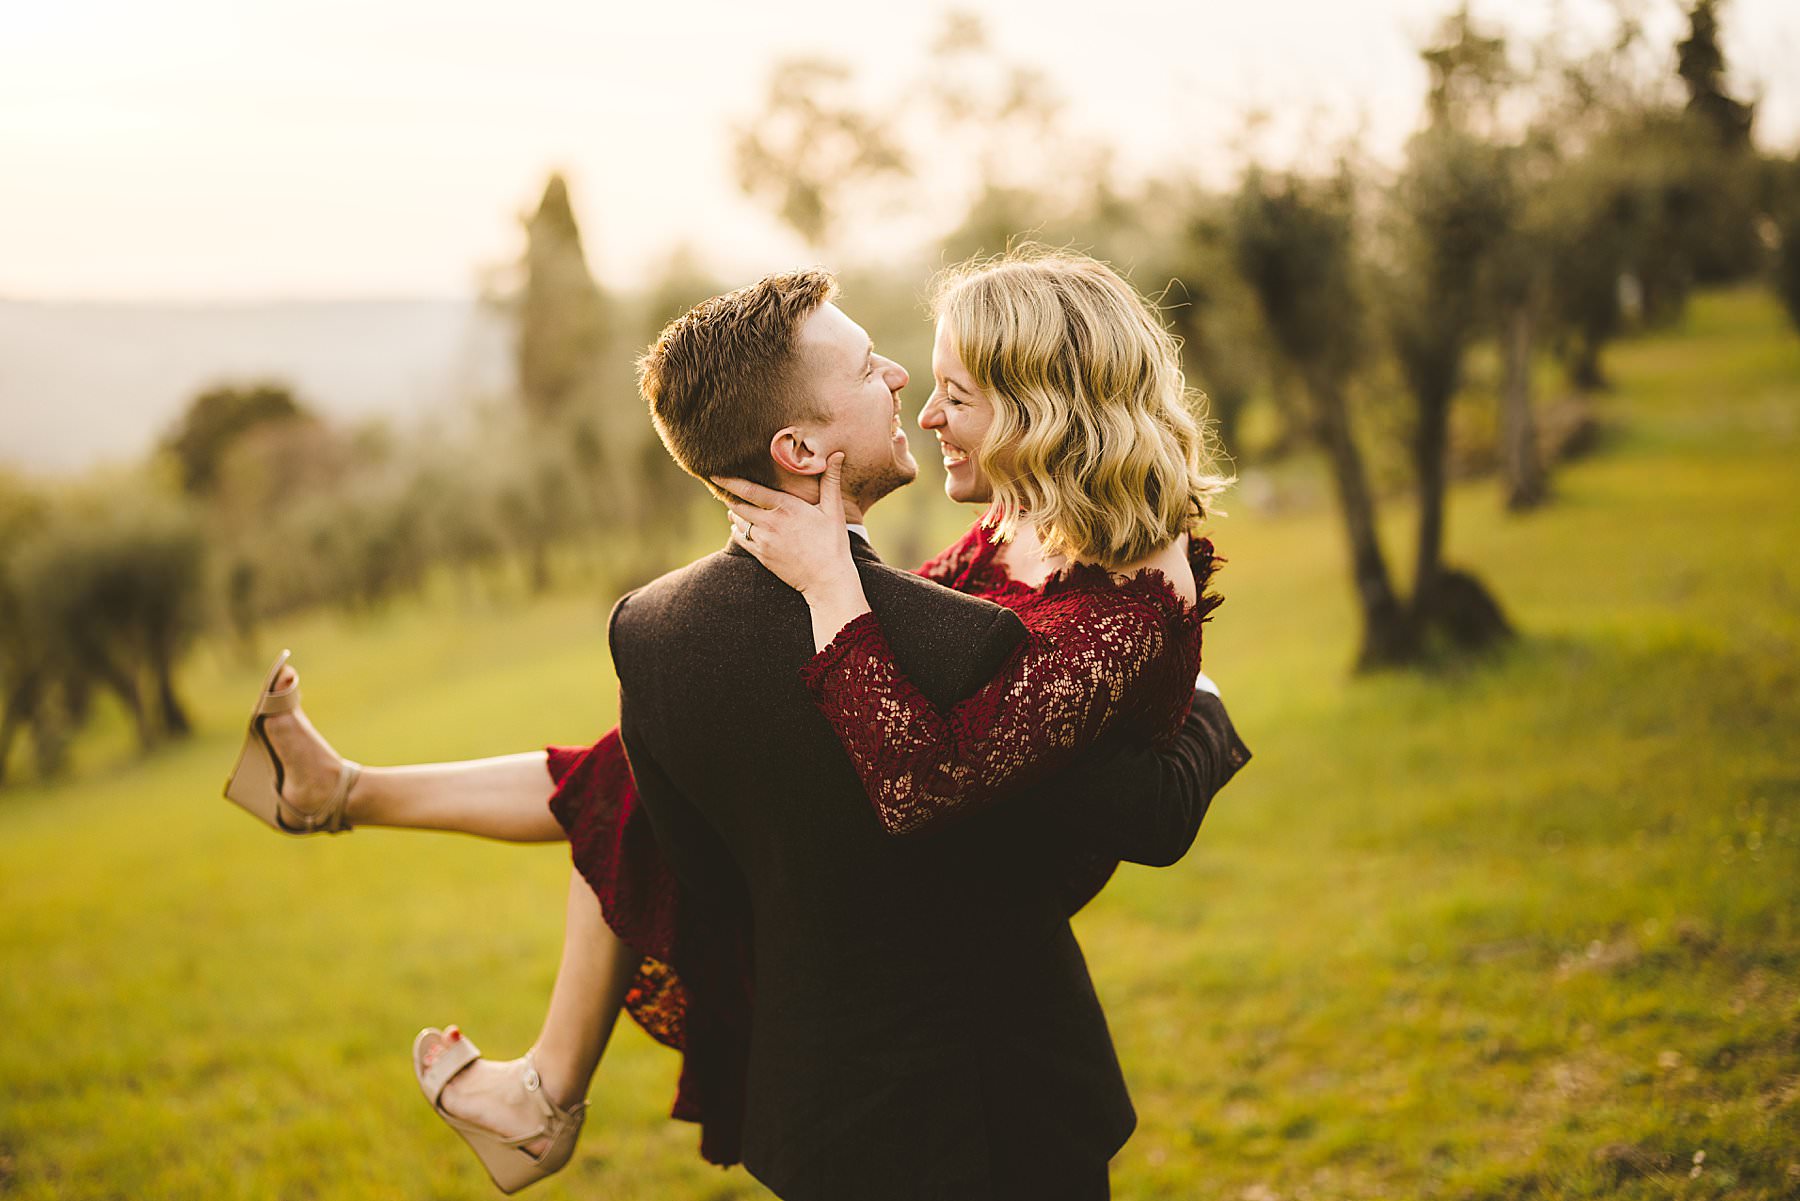 Emotional, romantic and joyful wedding anniversary photo shoot in rolling hills of Chianti